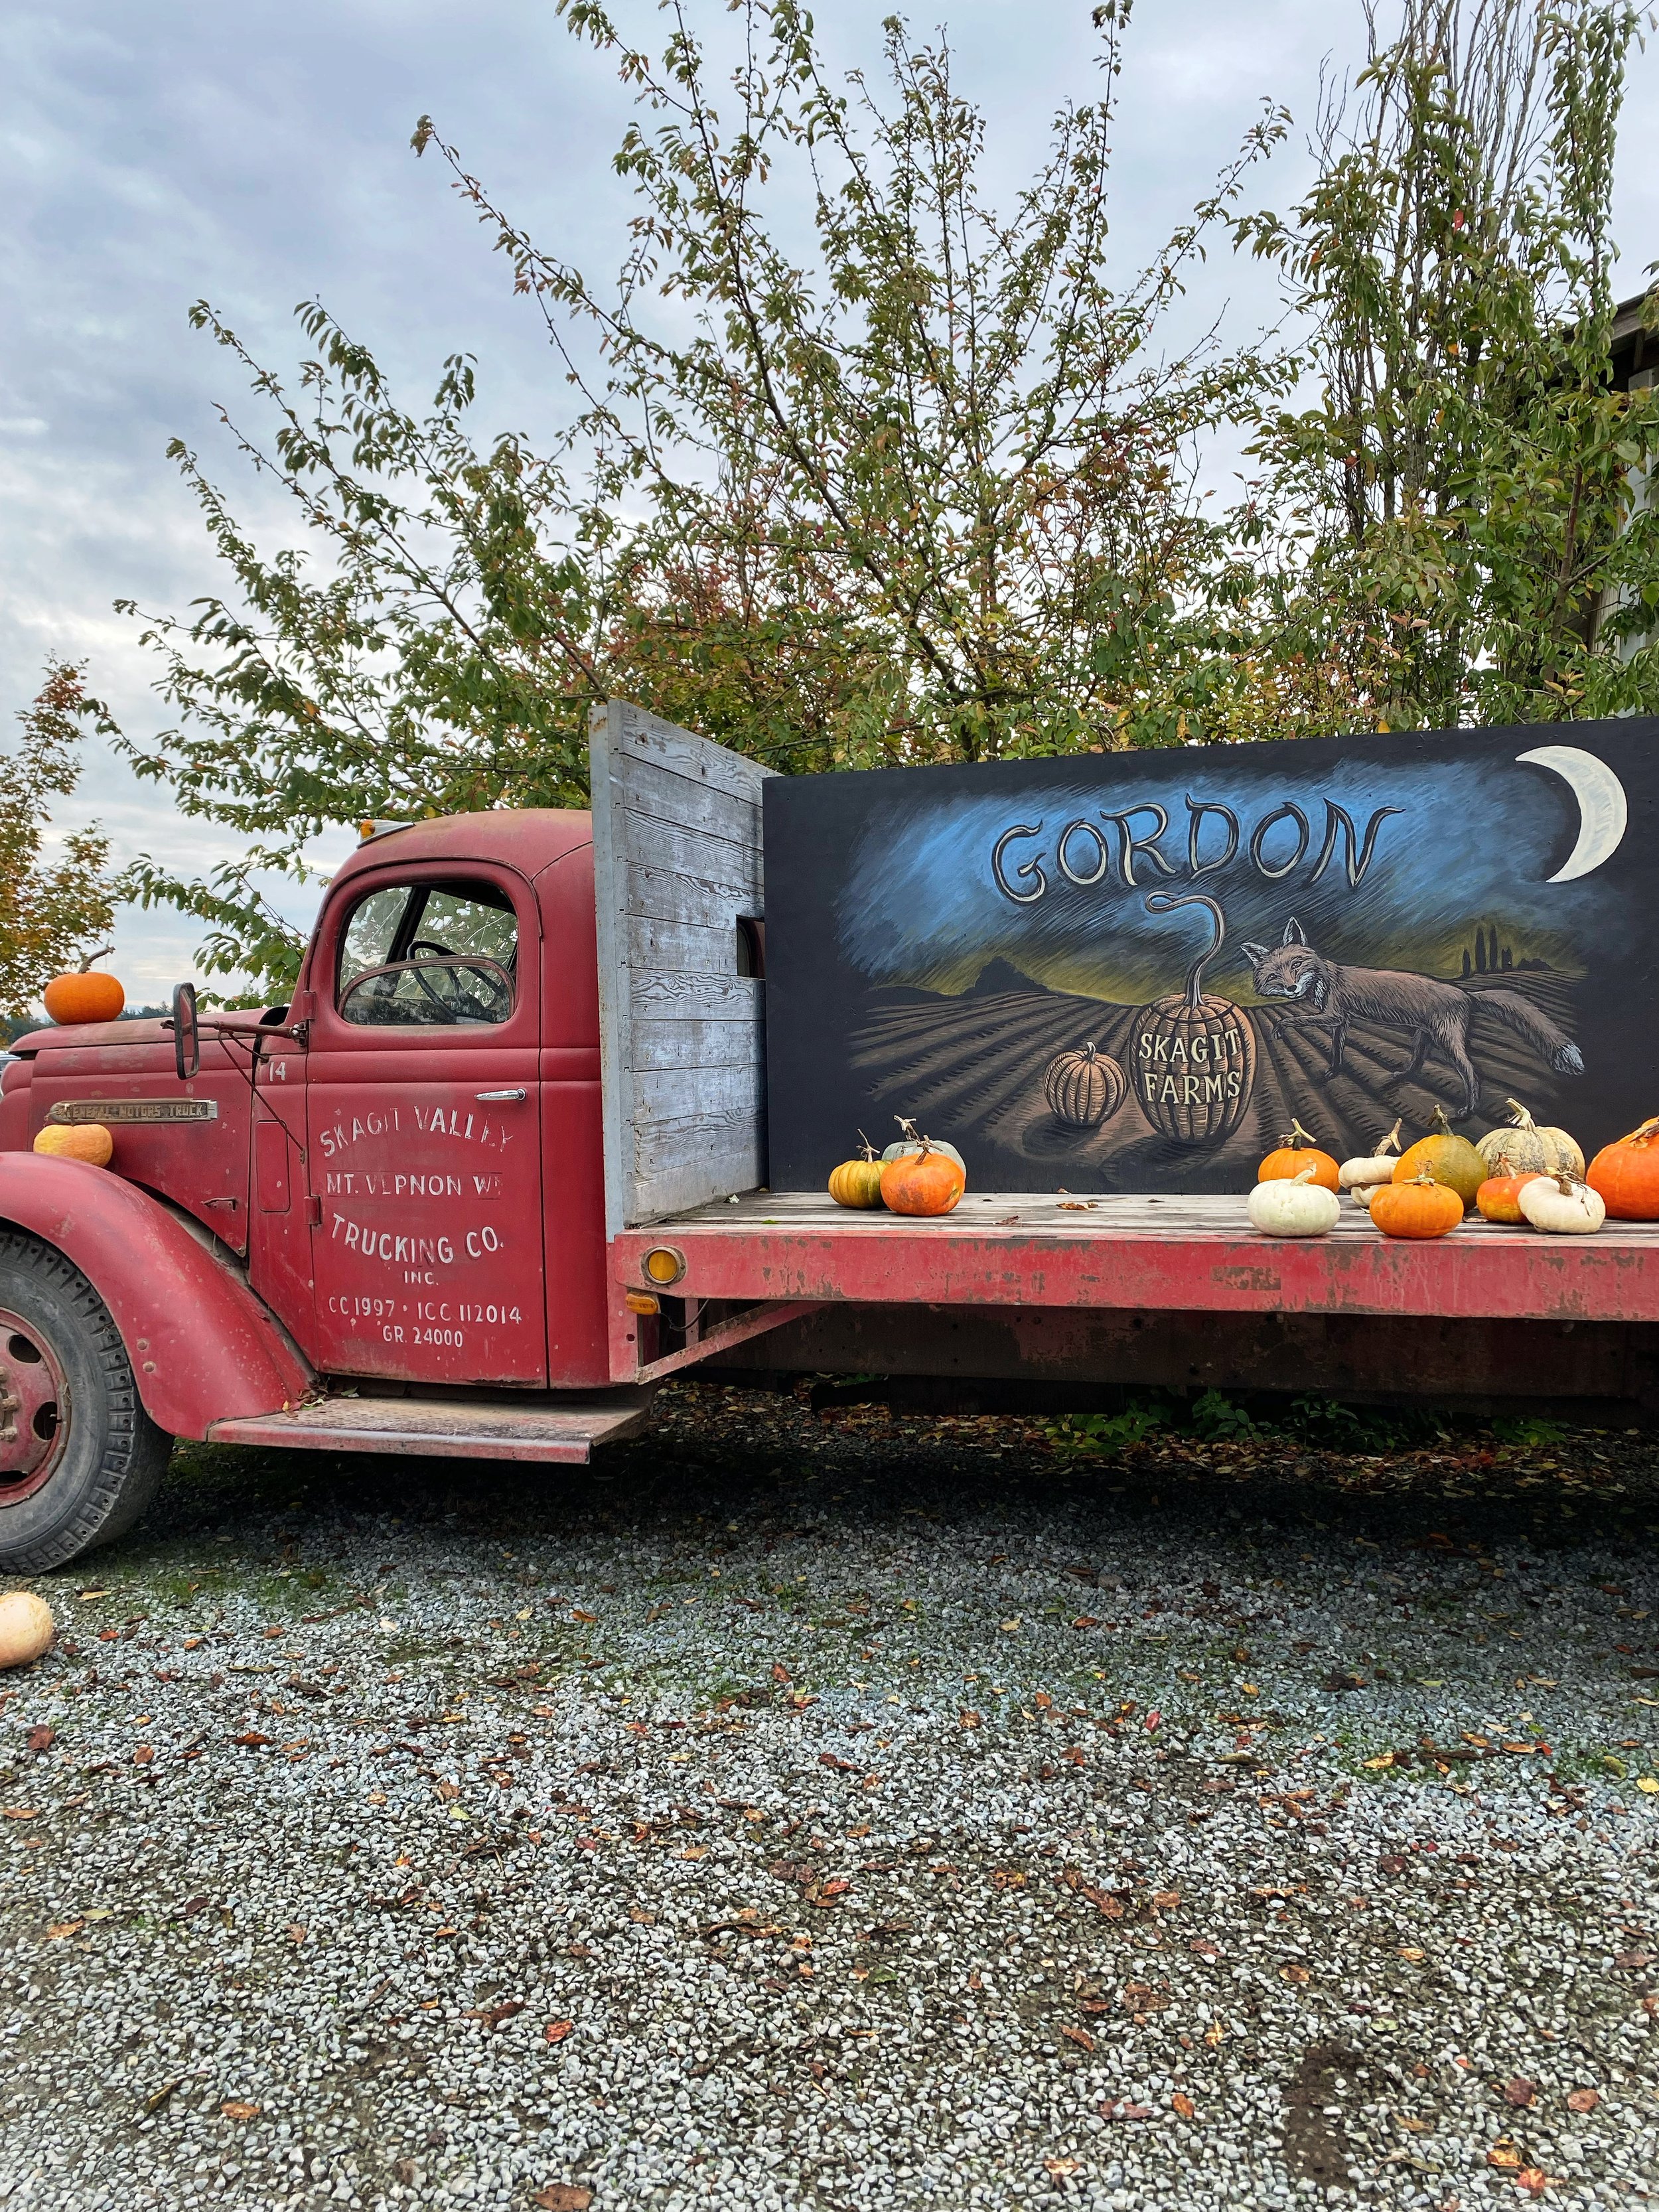 vintage flat bed truck at Gordon Skagit farms 